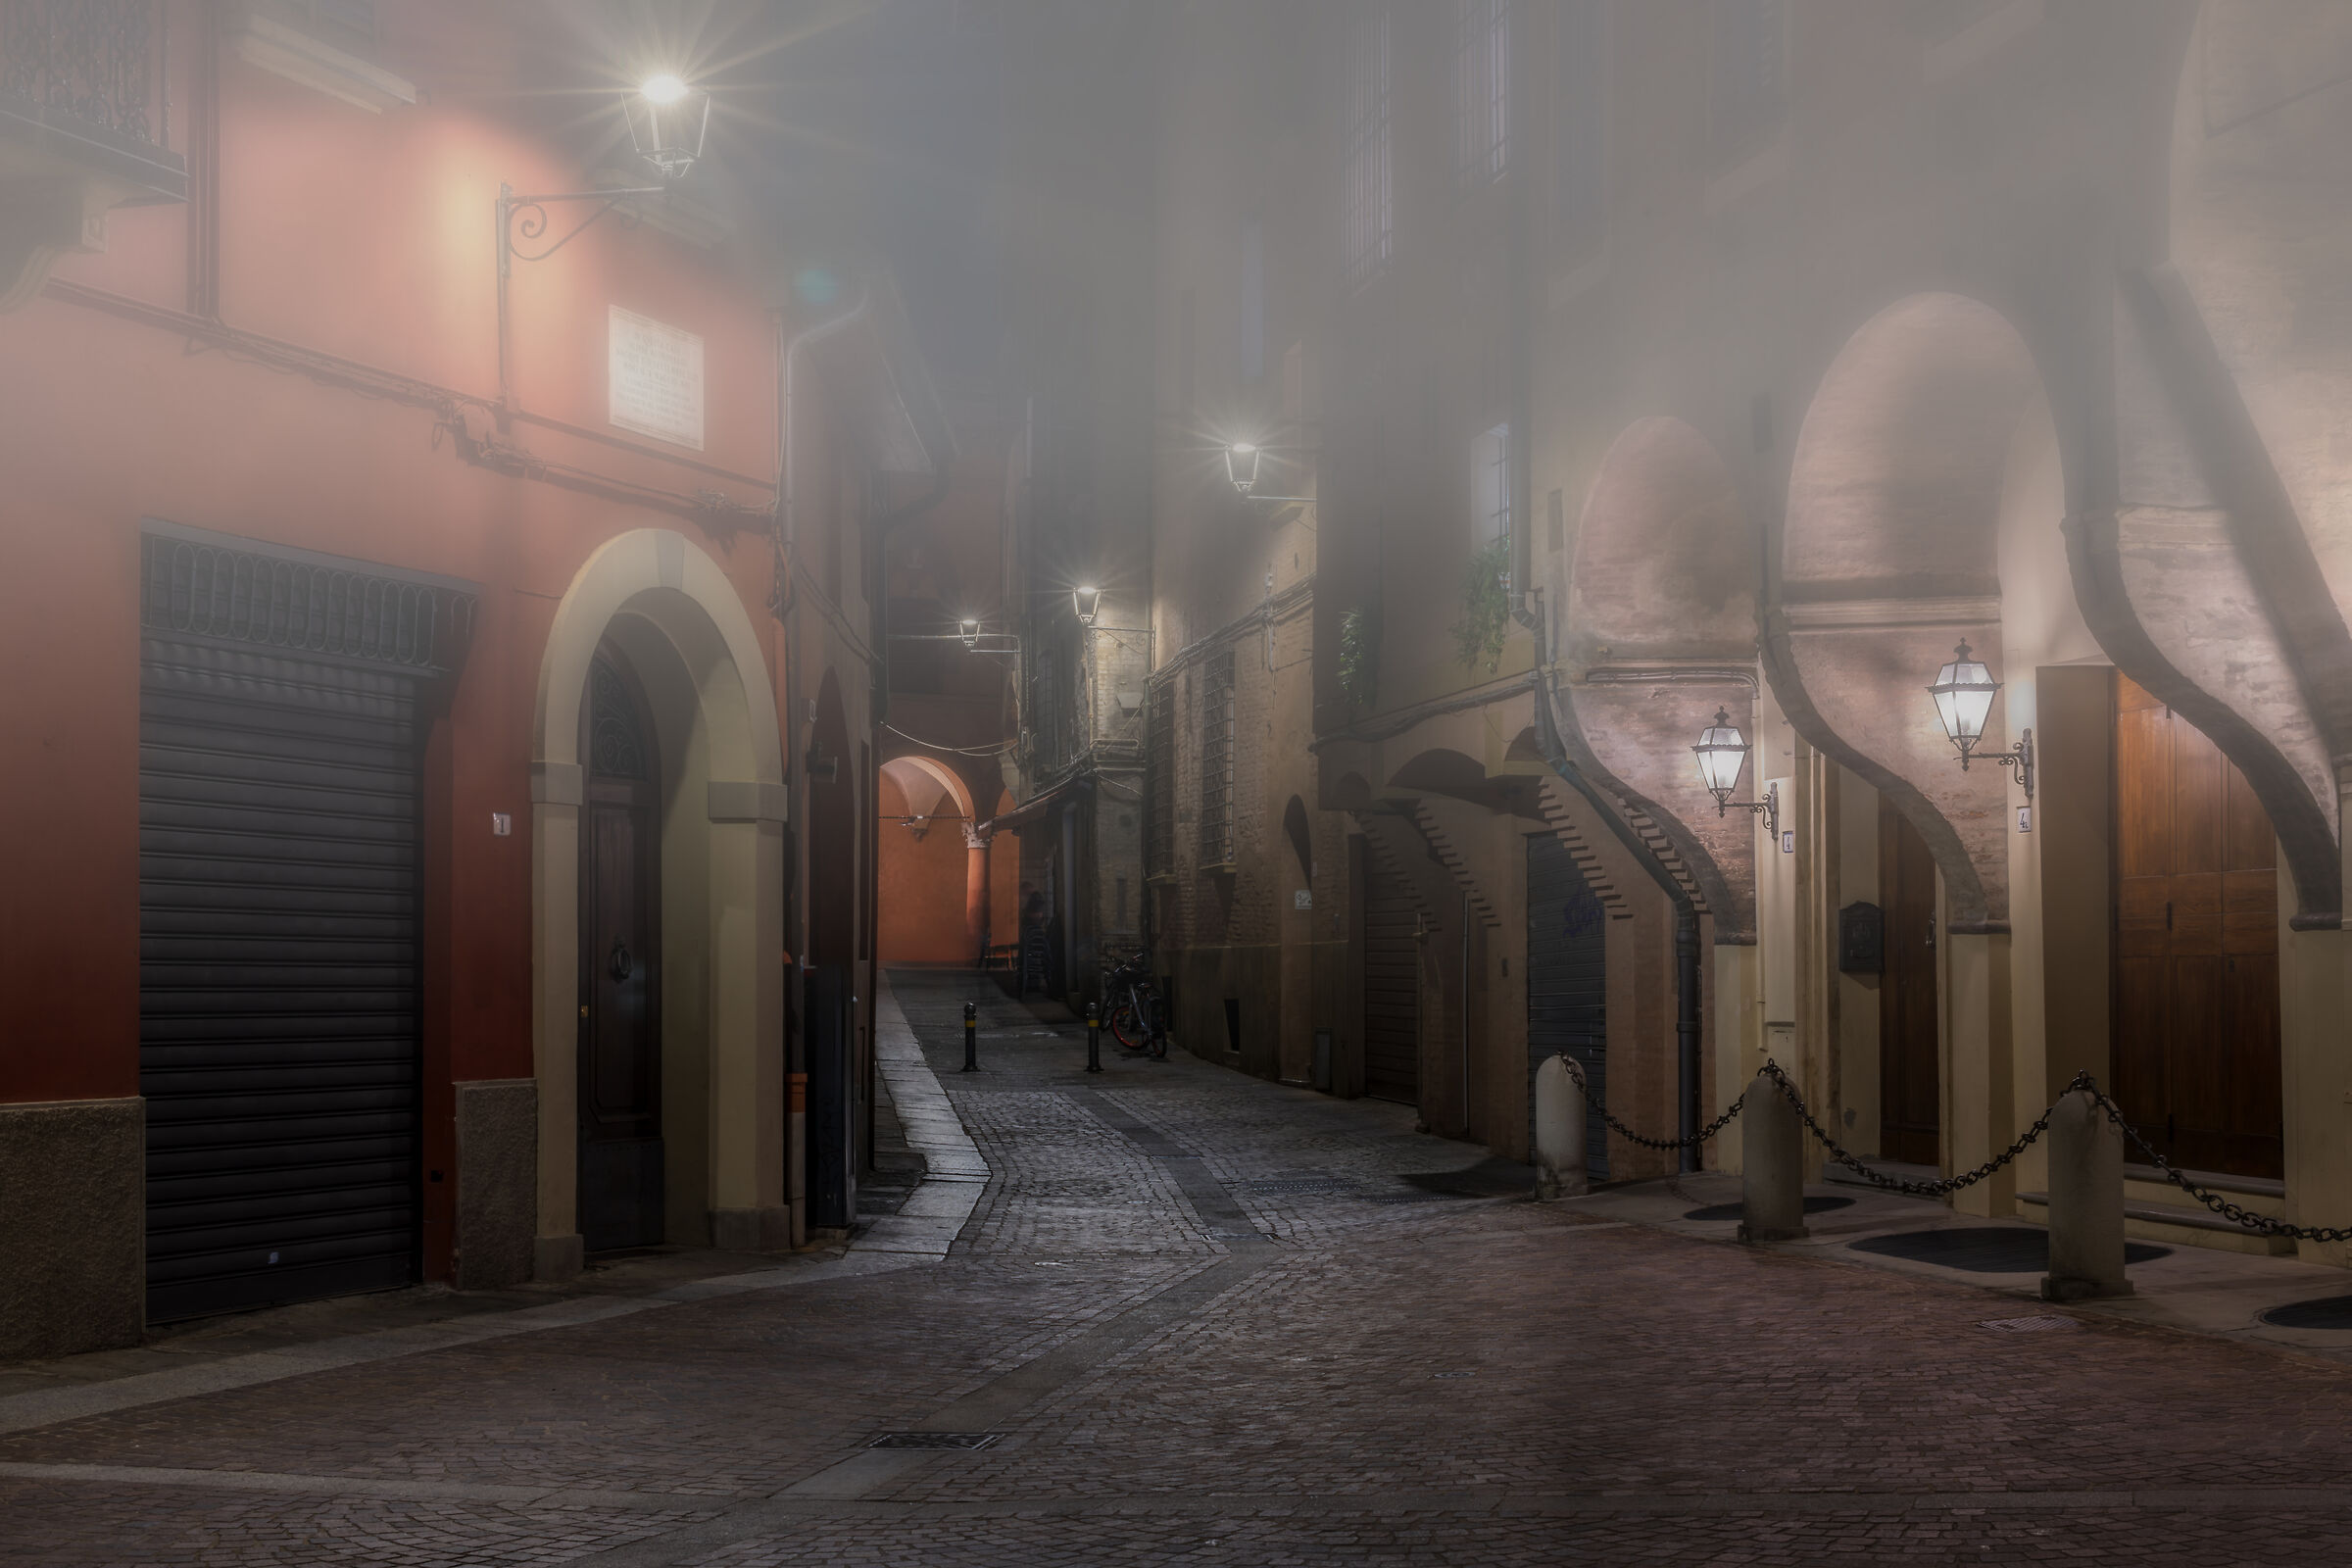 Alleys of Bologna...